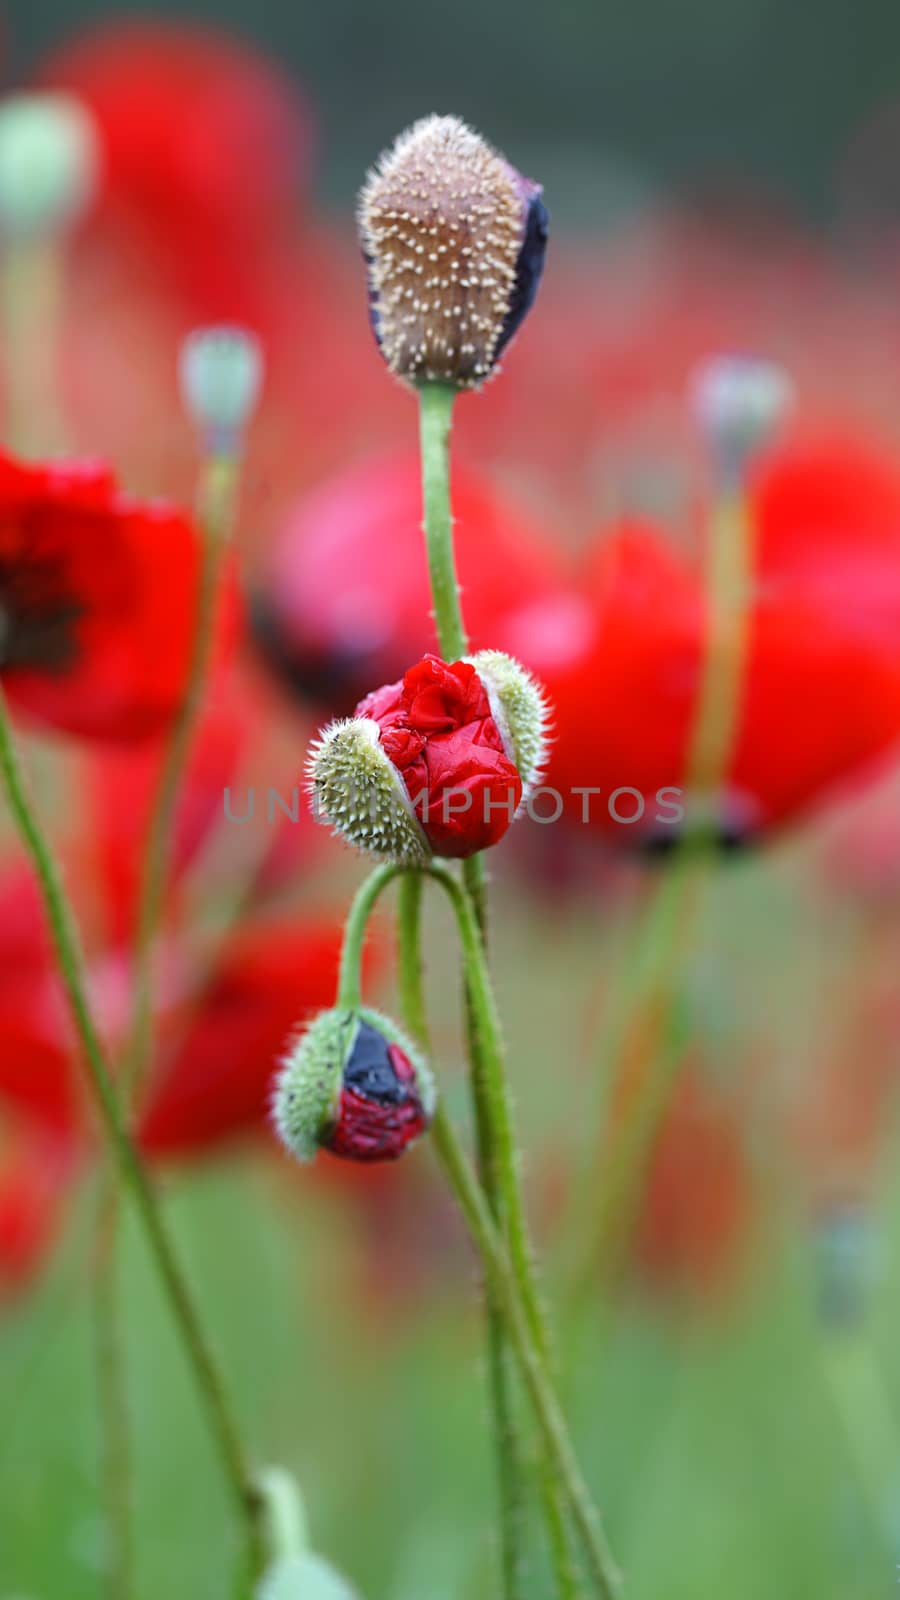 field of flowering red poppies by MegaArt